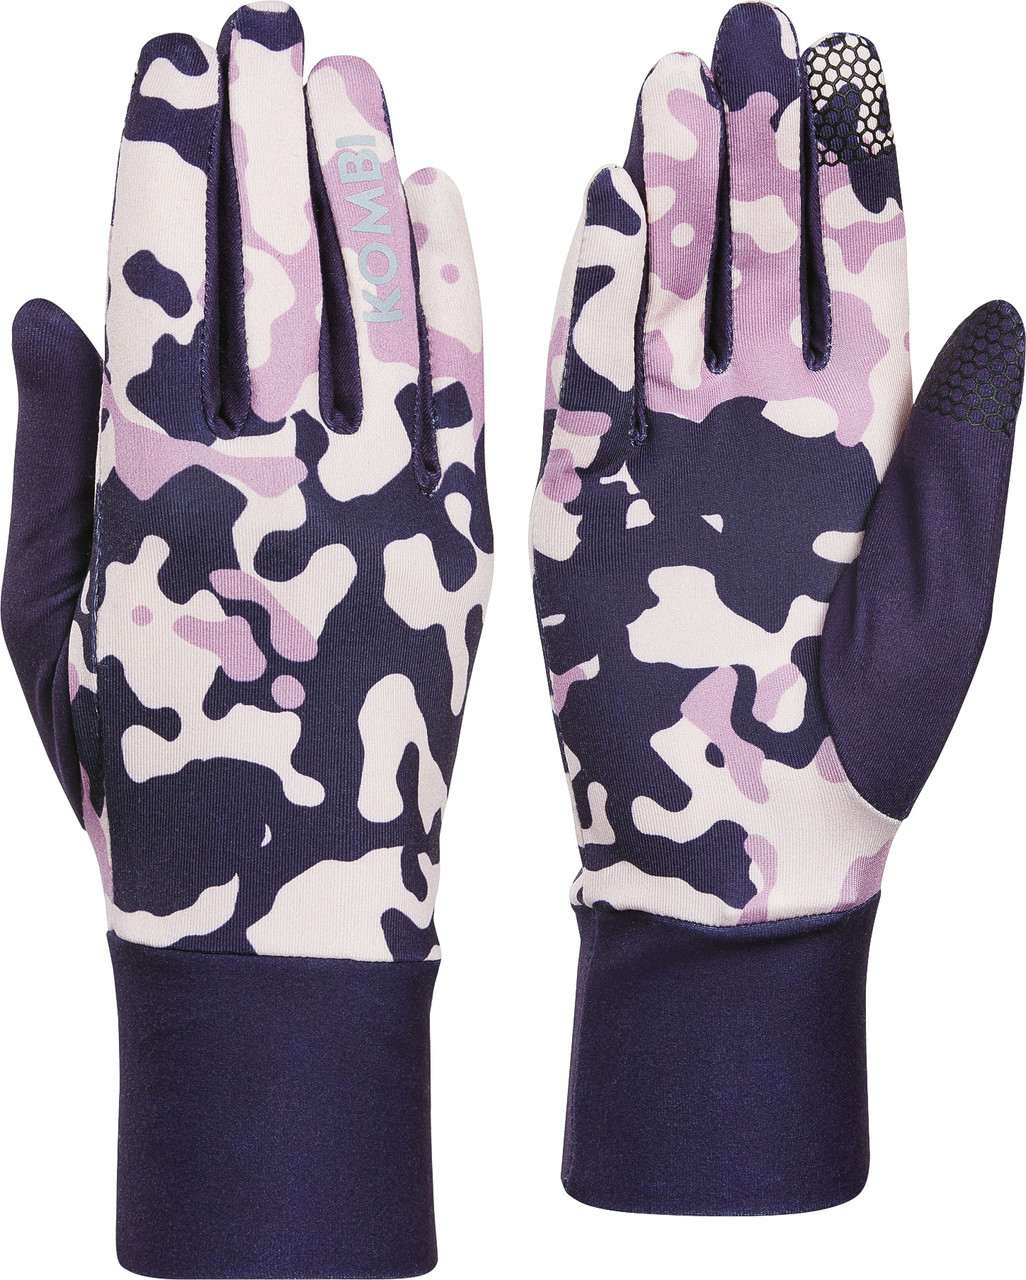 P1 Liner Gloves Camo Splash